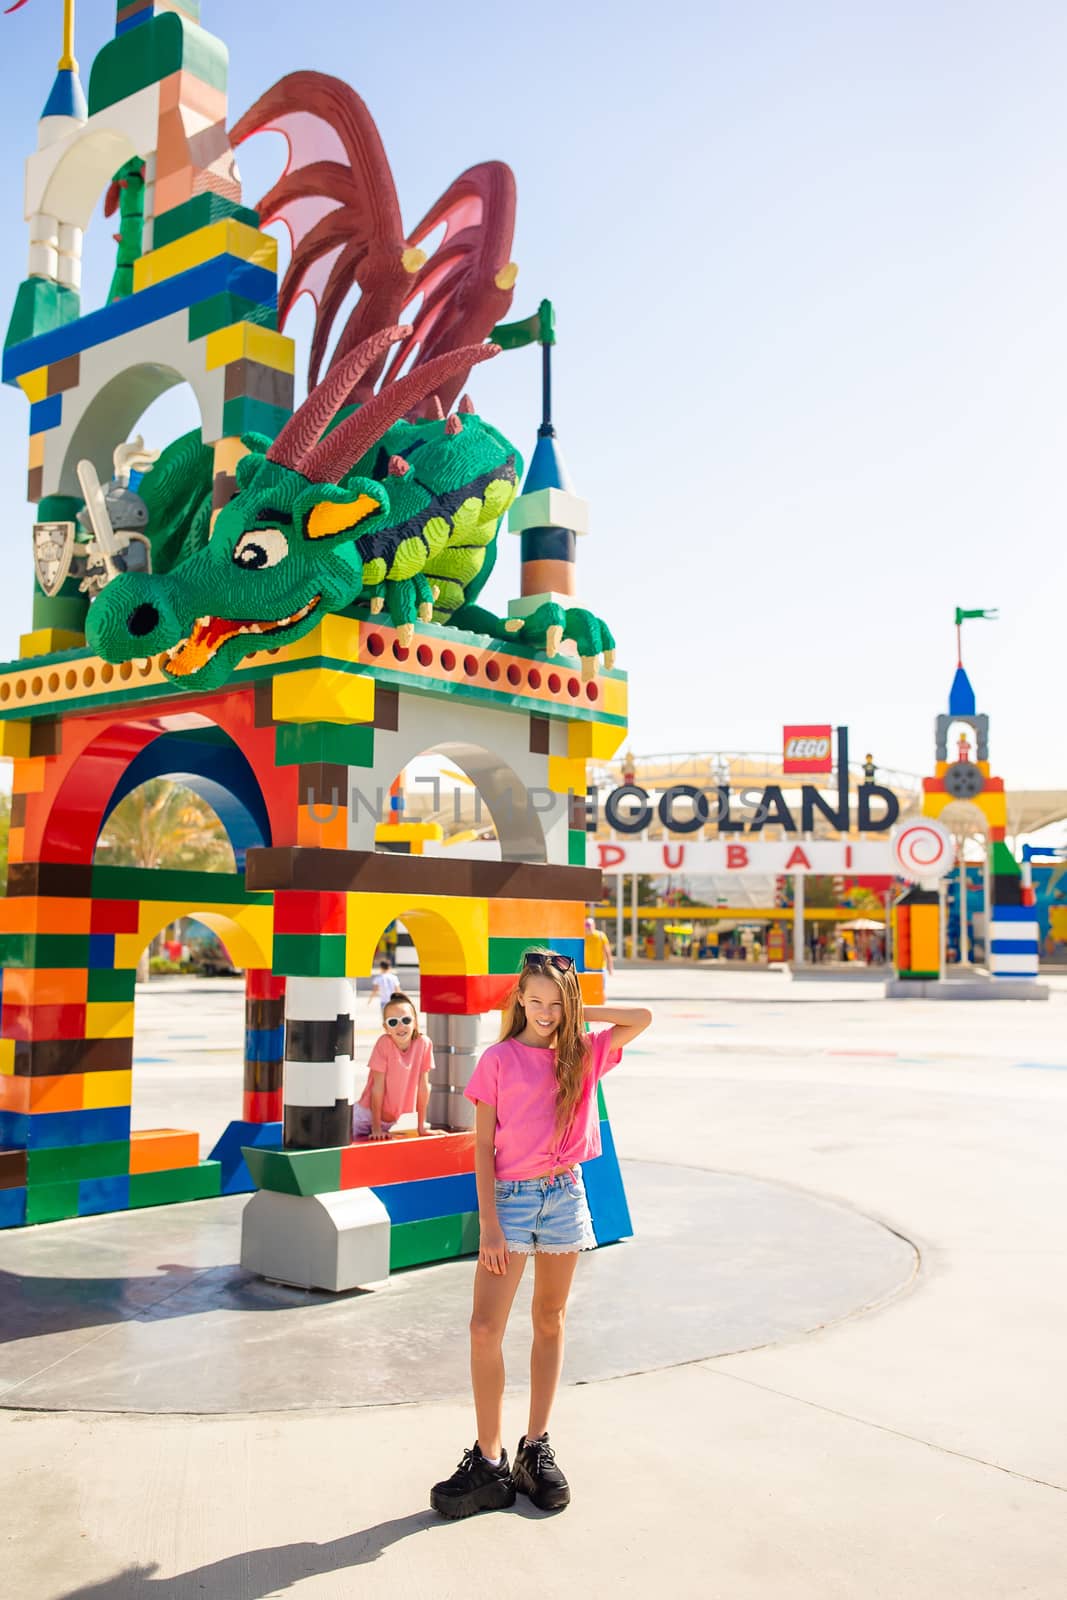 Dubai Legoland at Dubai Parks and Resorts,Dubai, United Arab Emirates by travnikovstudio